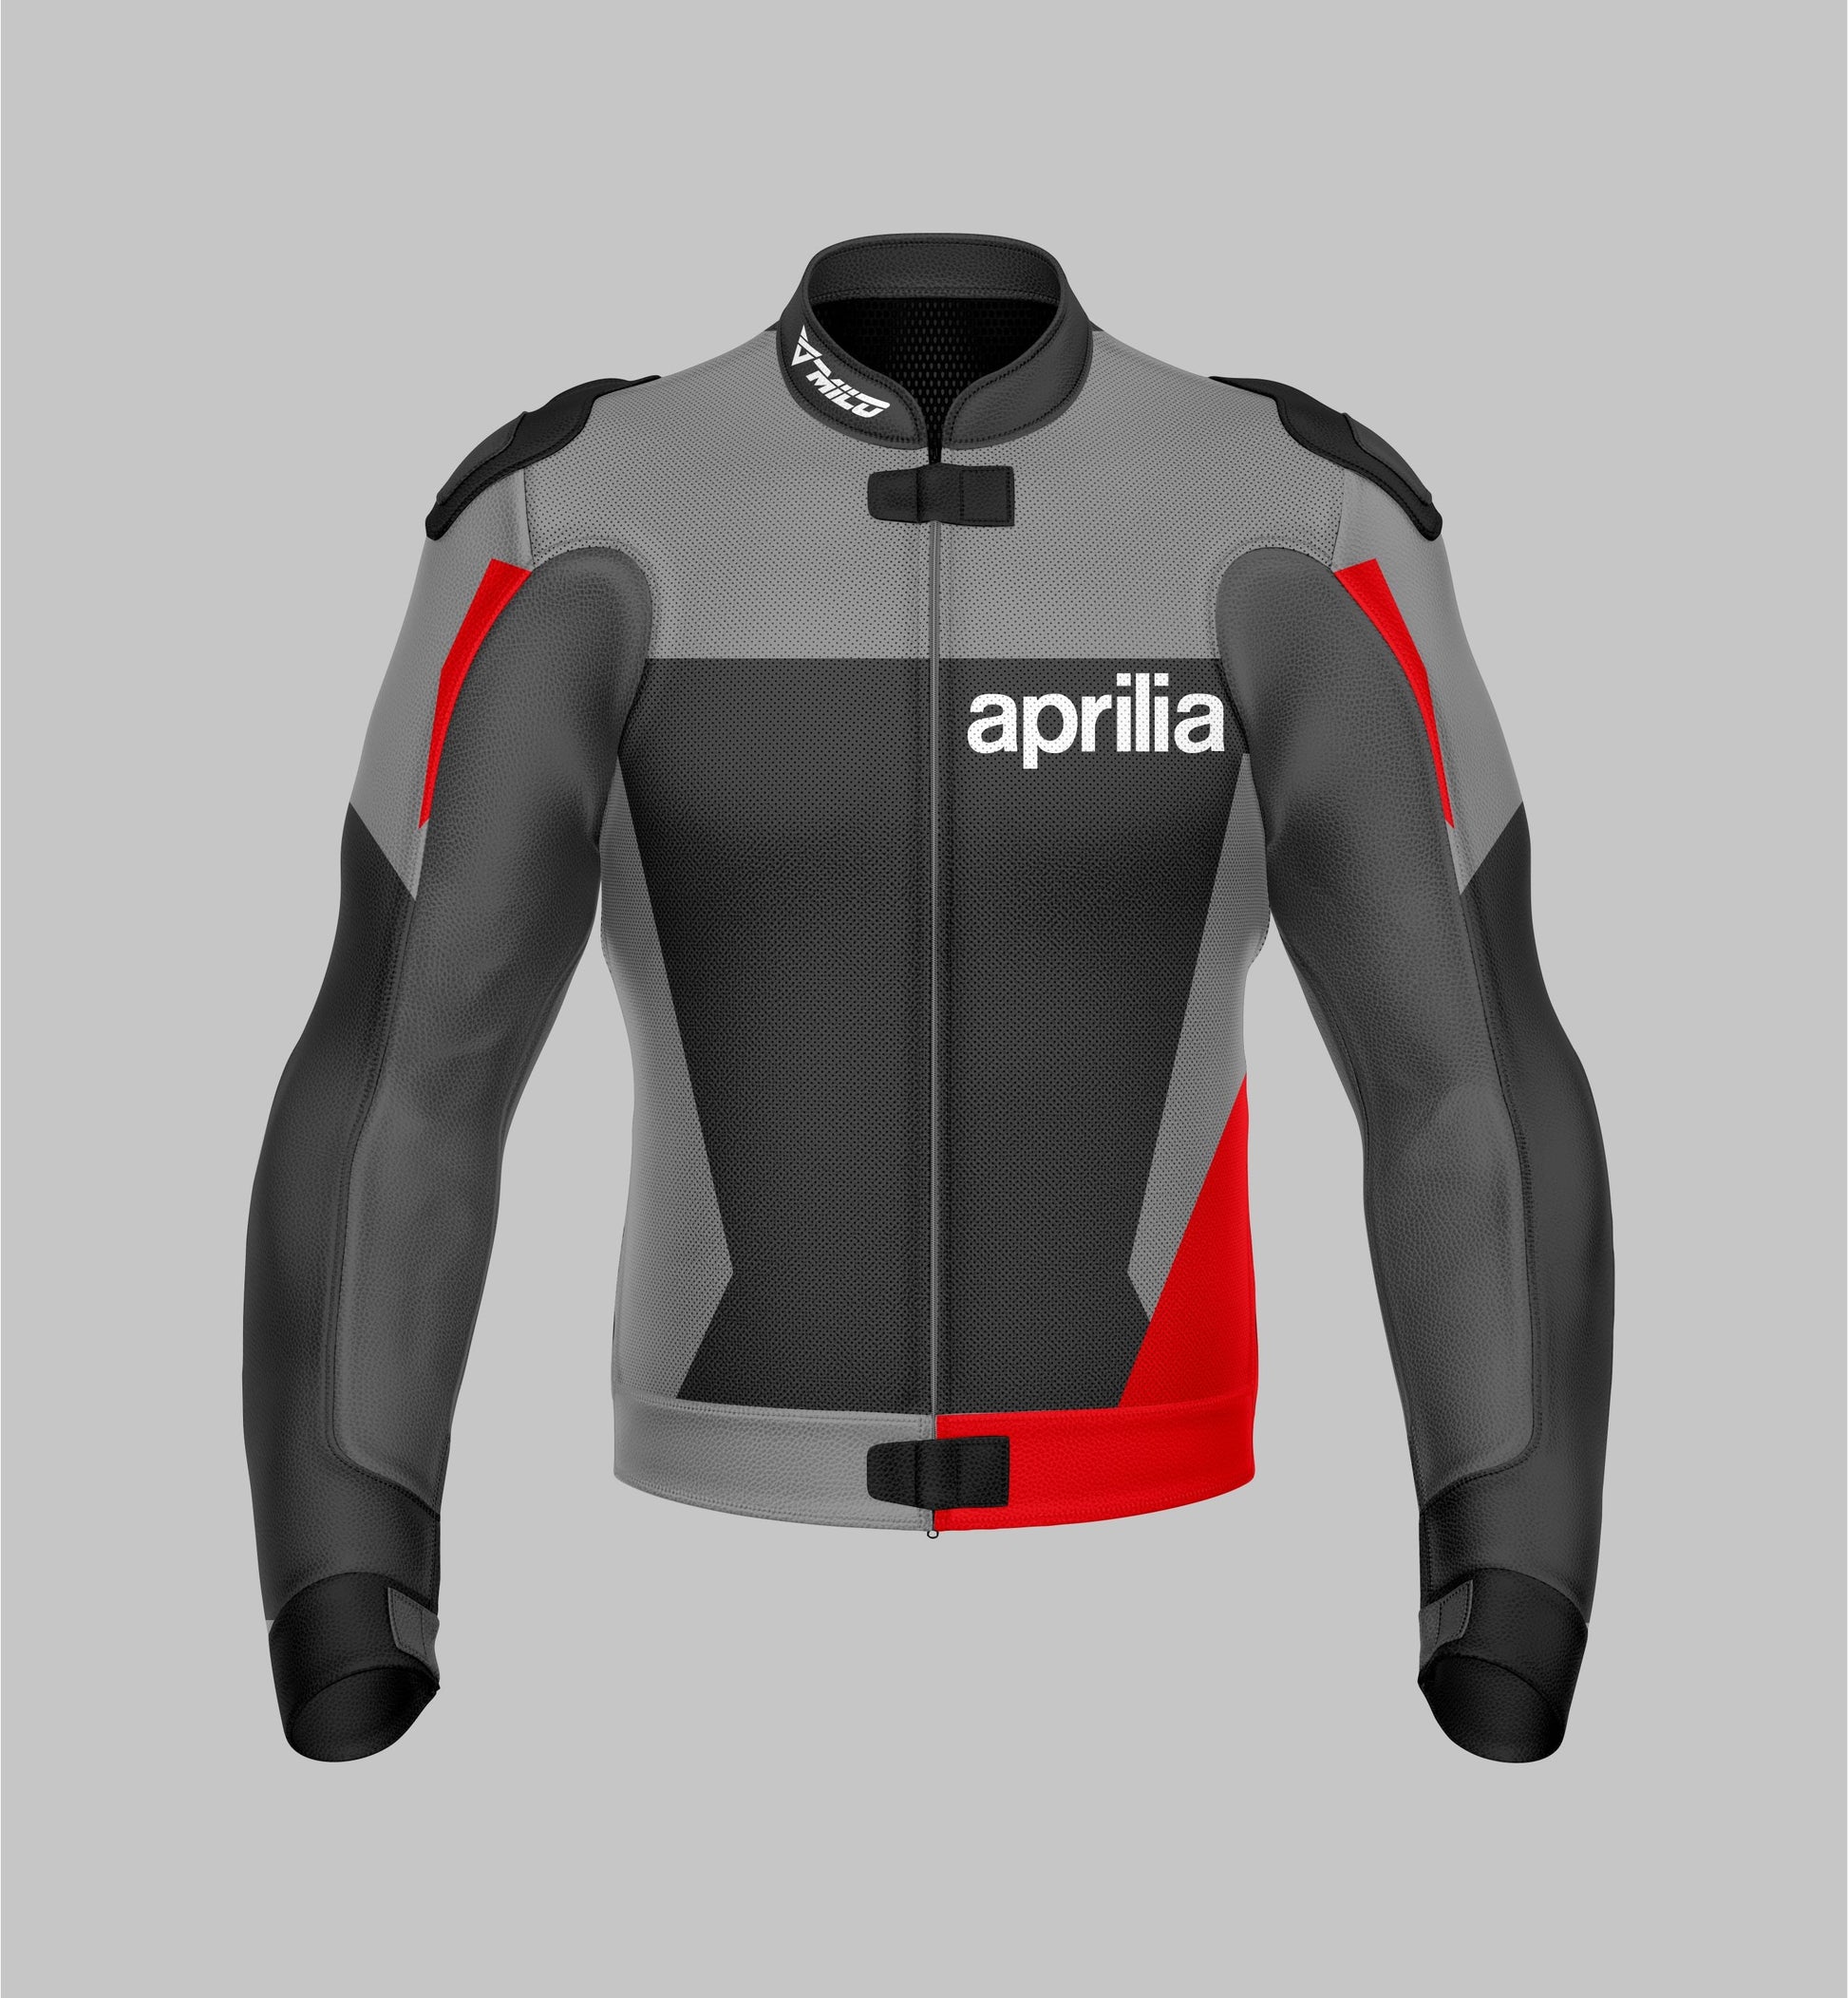 Aprilia Motorcycle Racing Perforated Leather Jacket